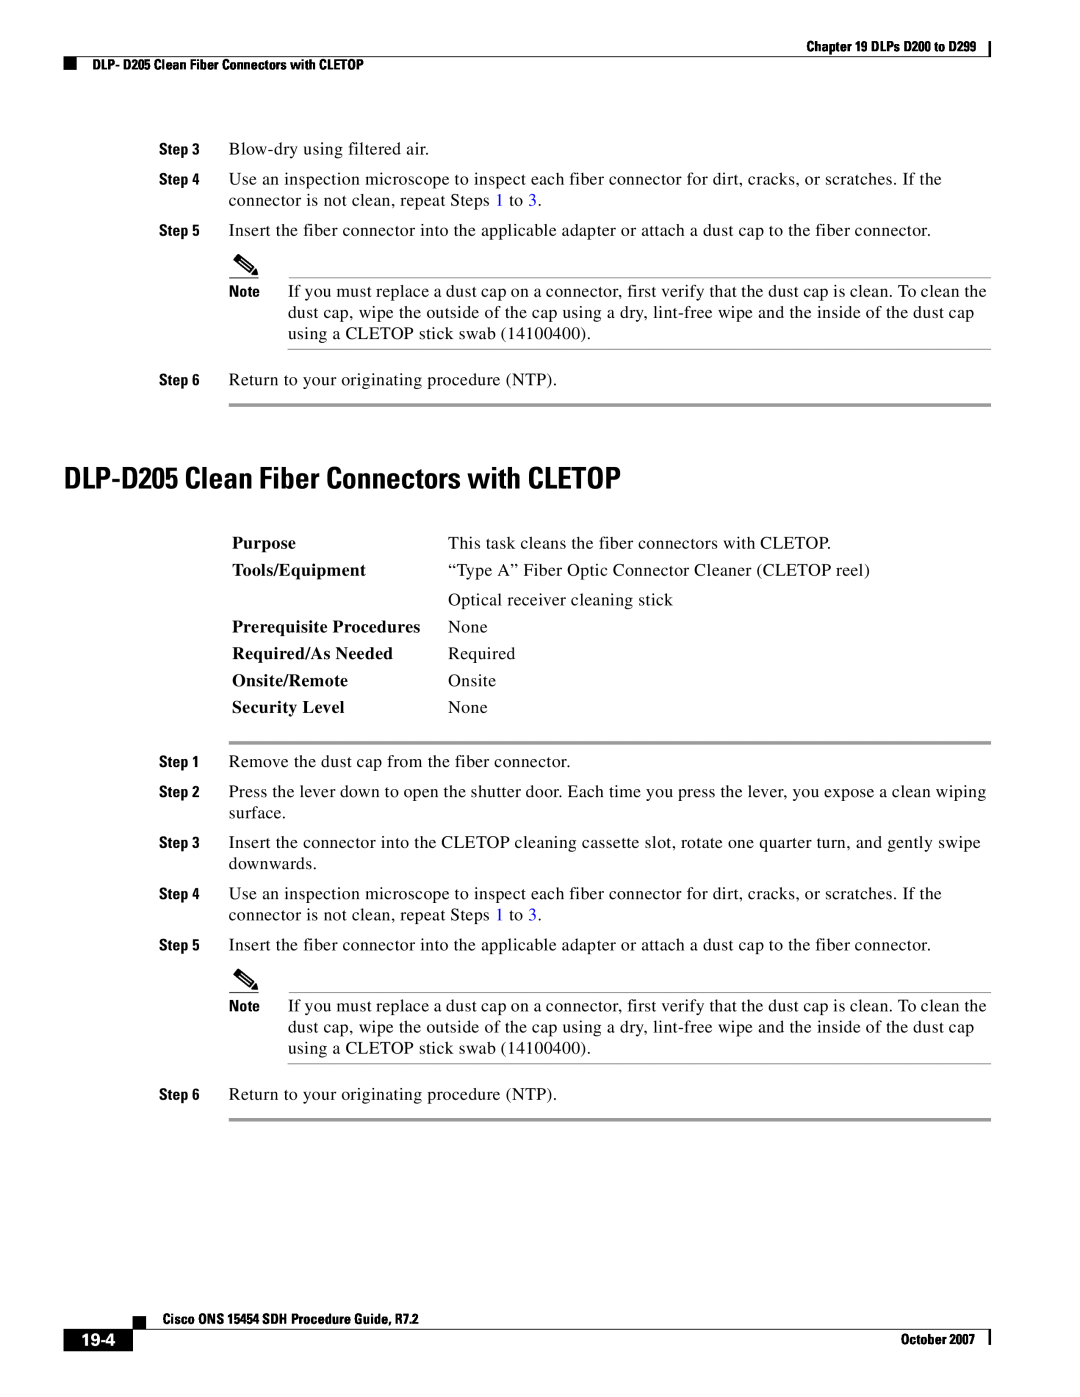 Cisco Systems D200 DLP-D205 Clean Fiber Connectors with CLETOP, 19-4, Purpose, Tools/Equipment, Prerequisite Procedures 